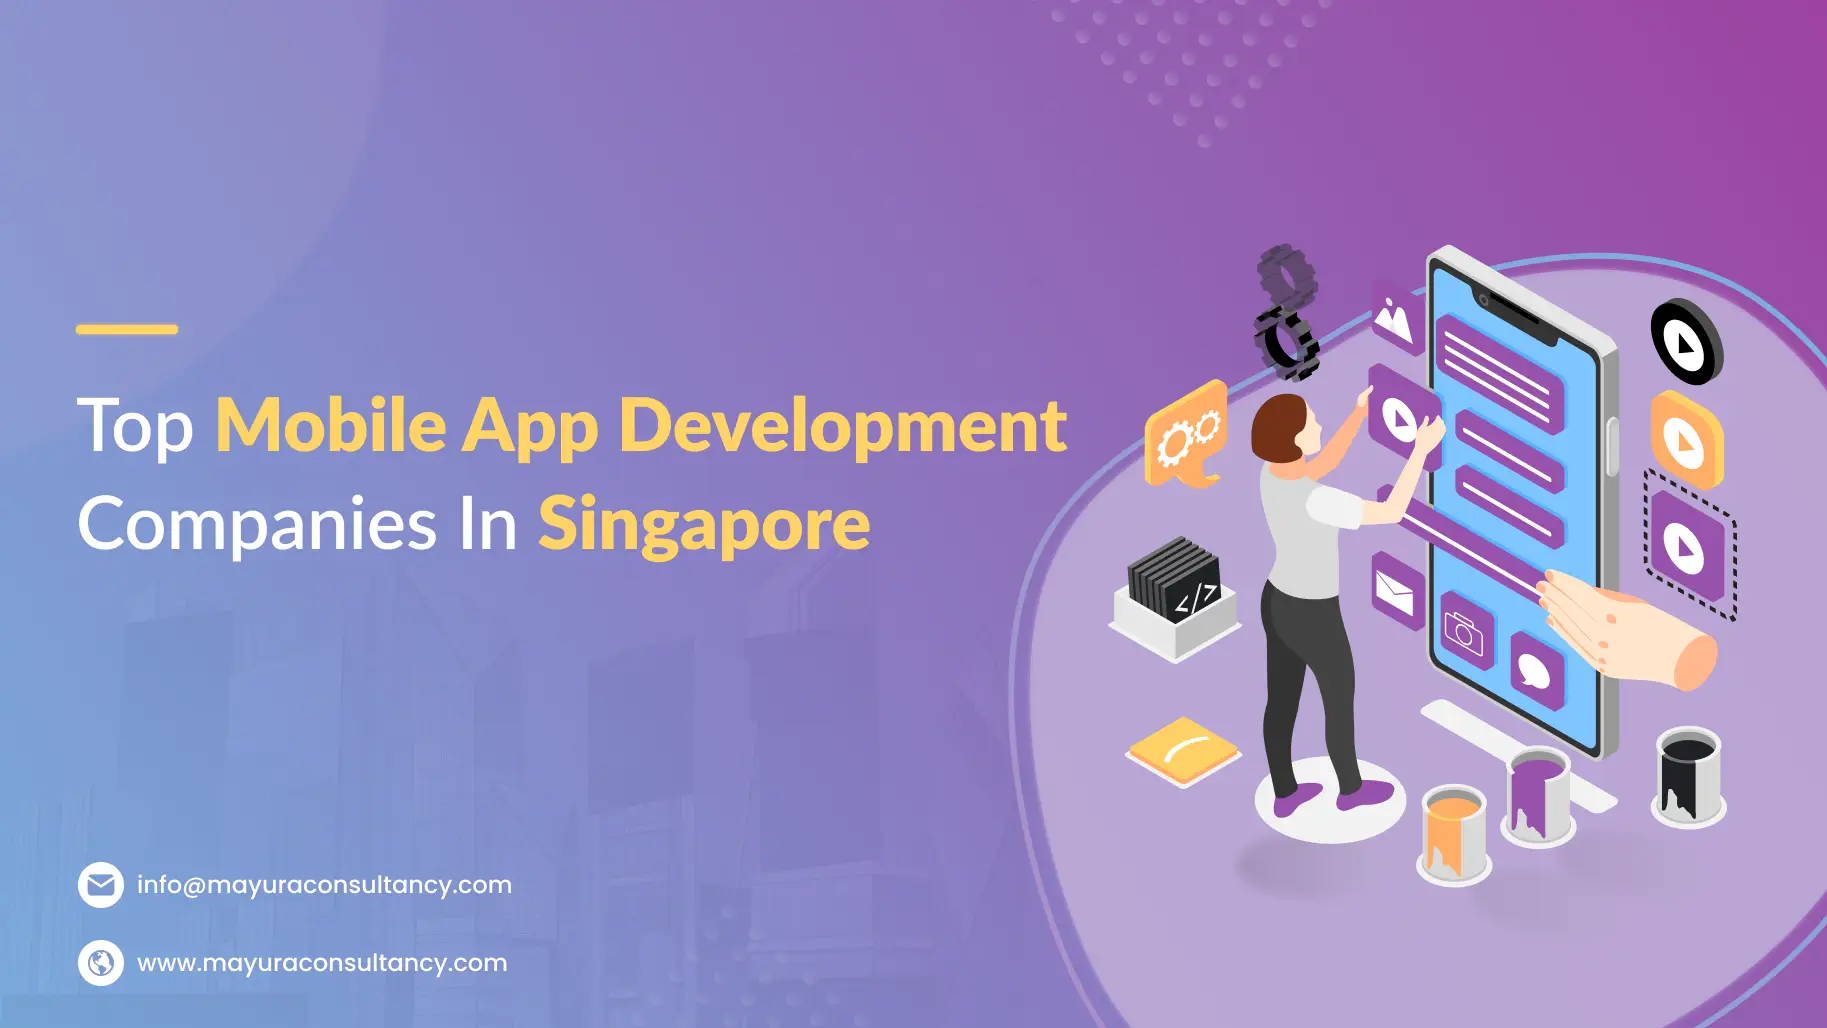 Top Mobile App Development Companies in Singapore